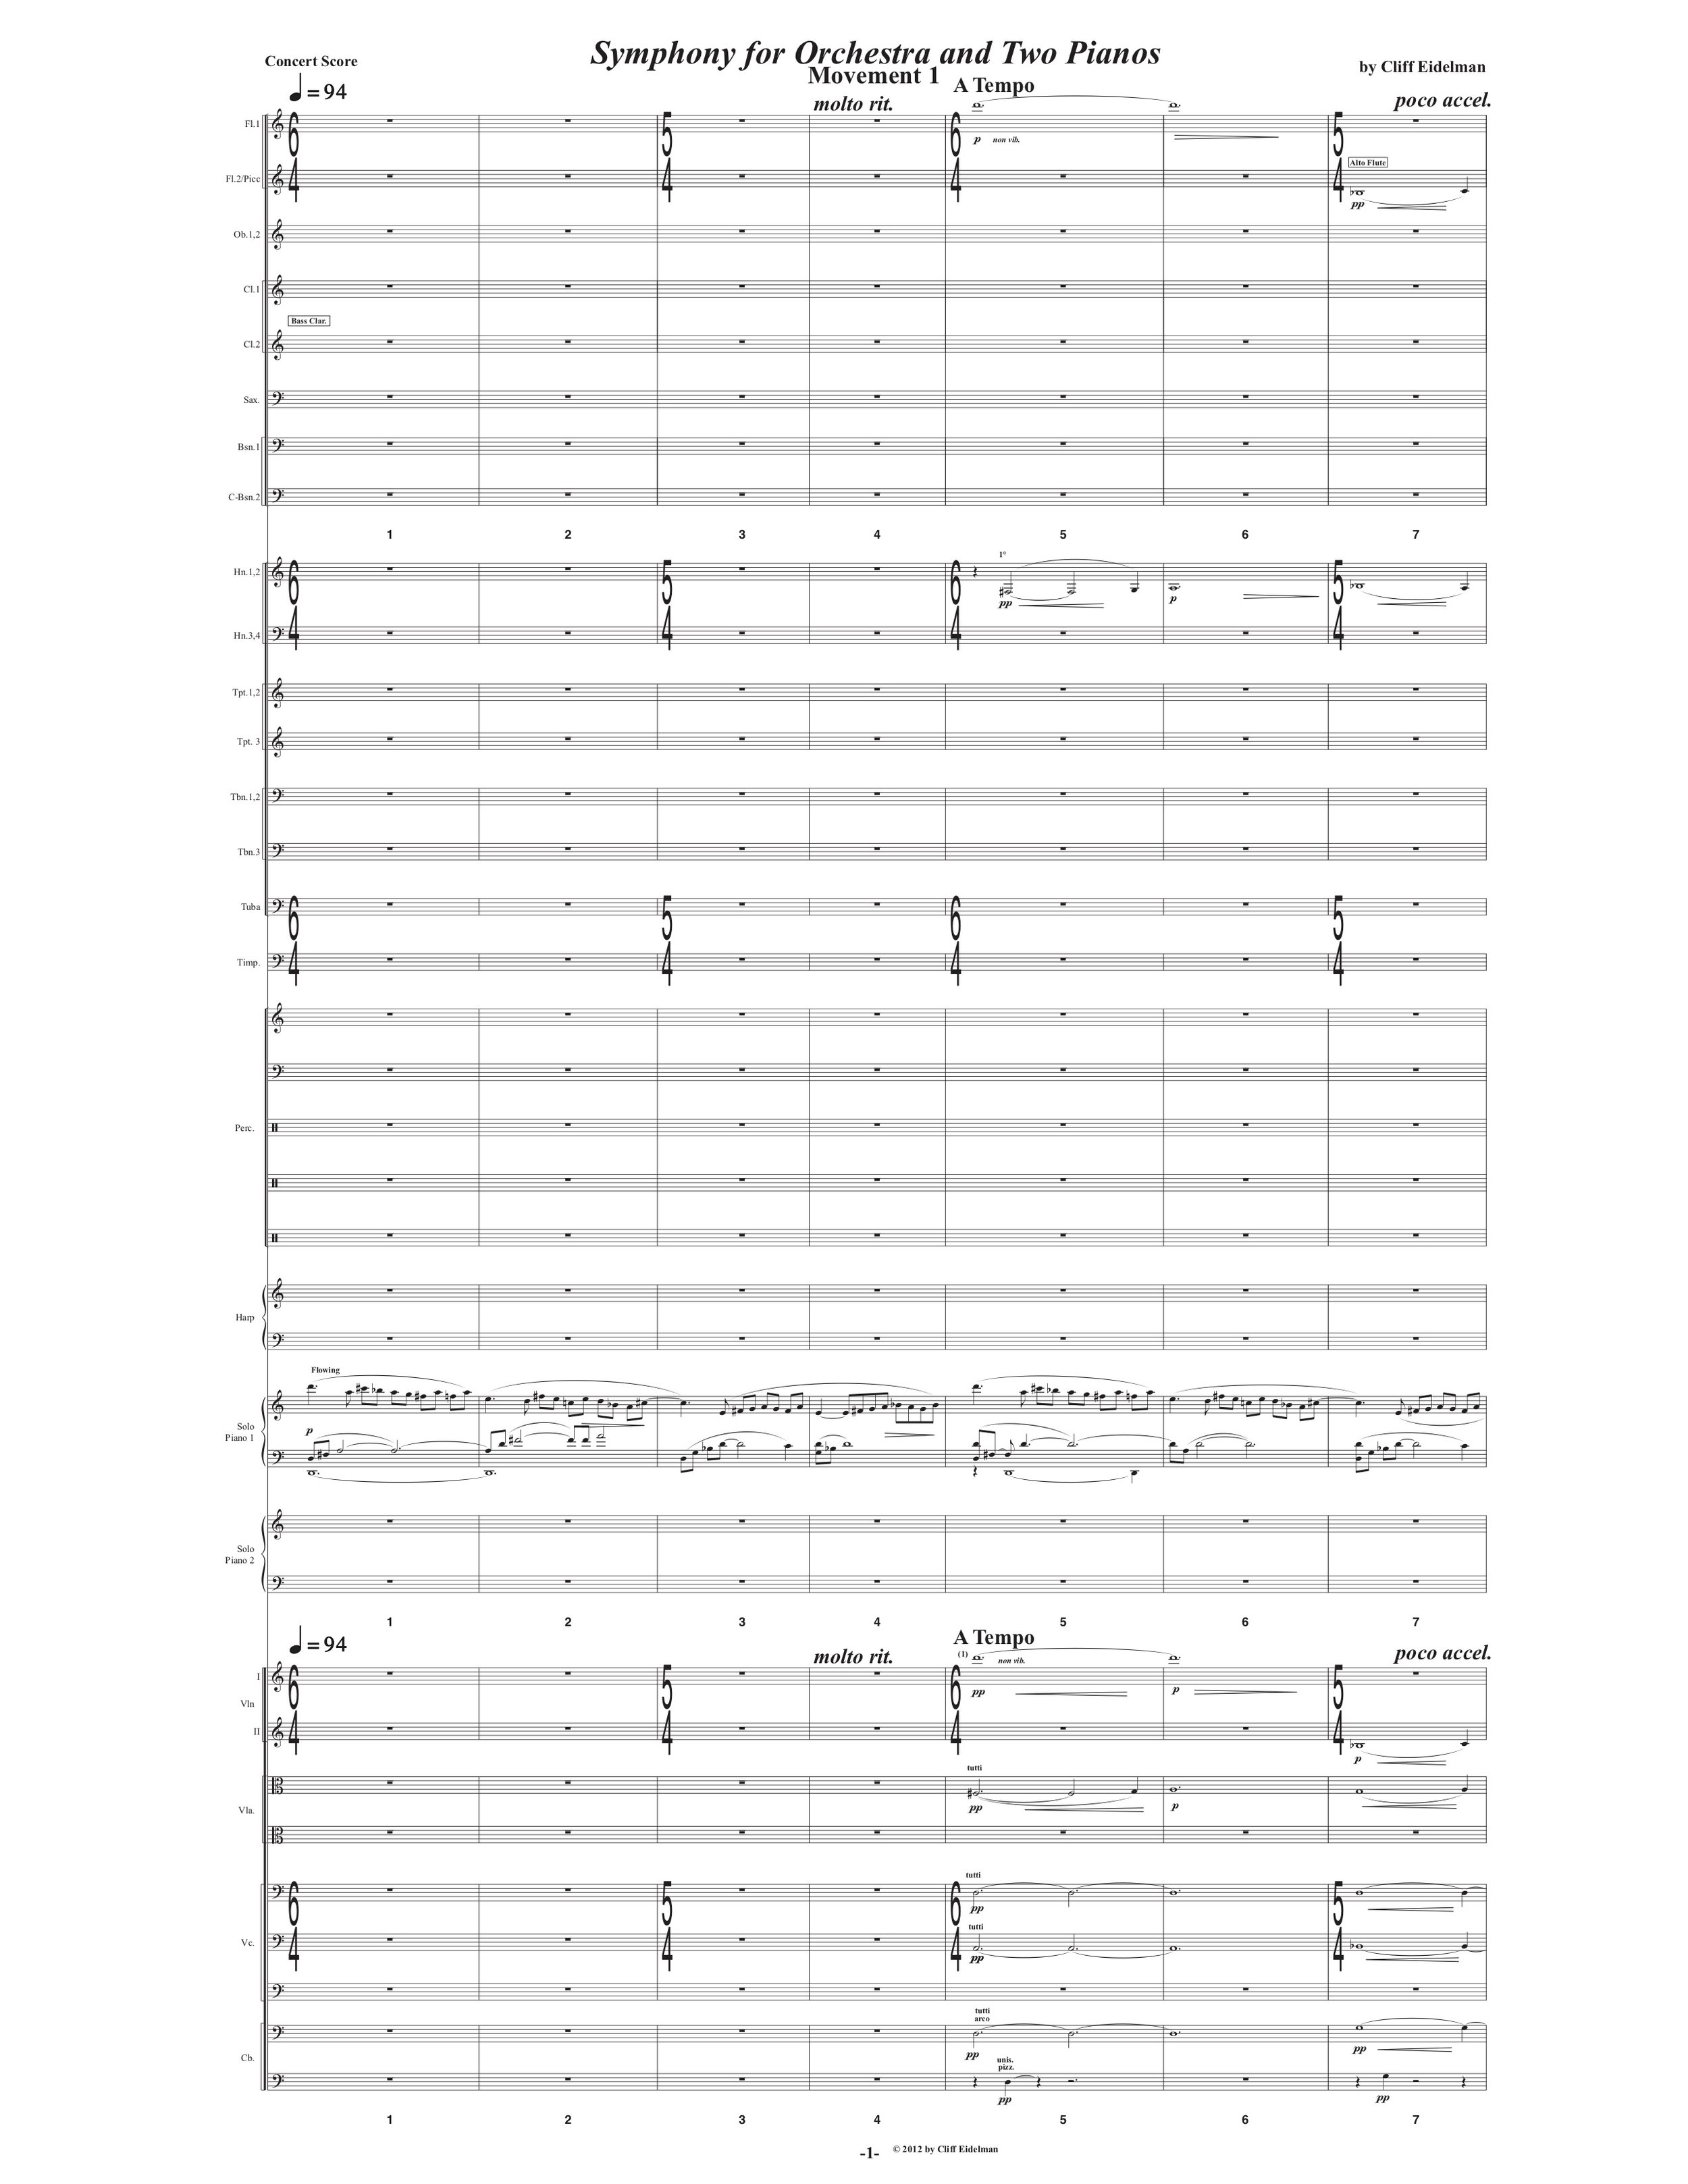 Symphony_Orch & 2 Pianos p6.jpg